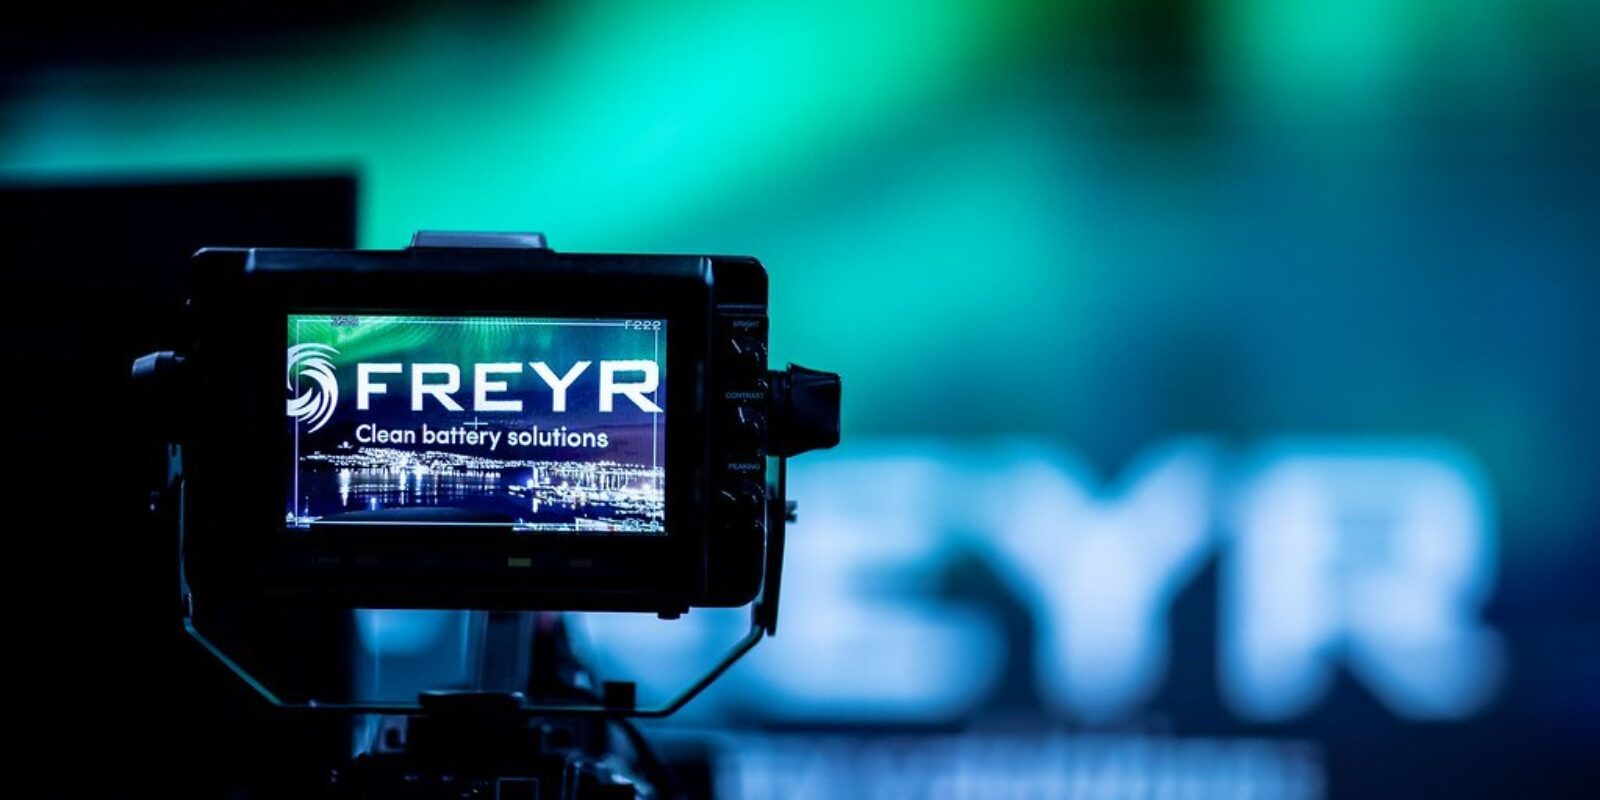 FREYR camera